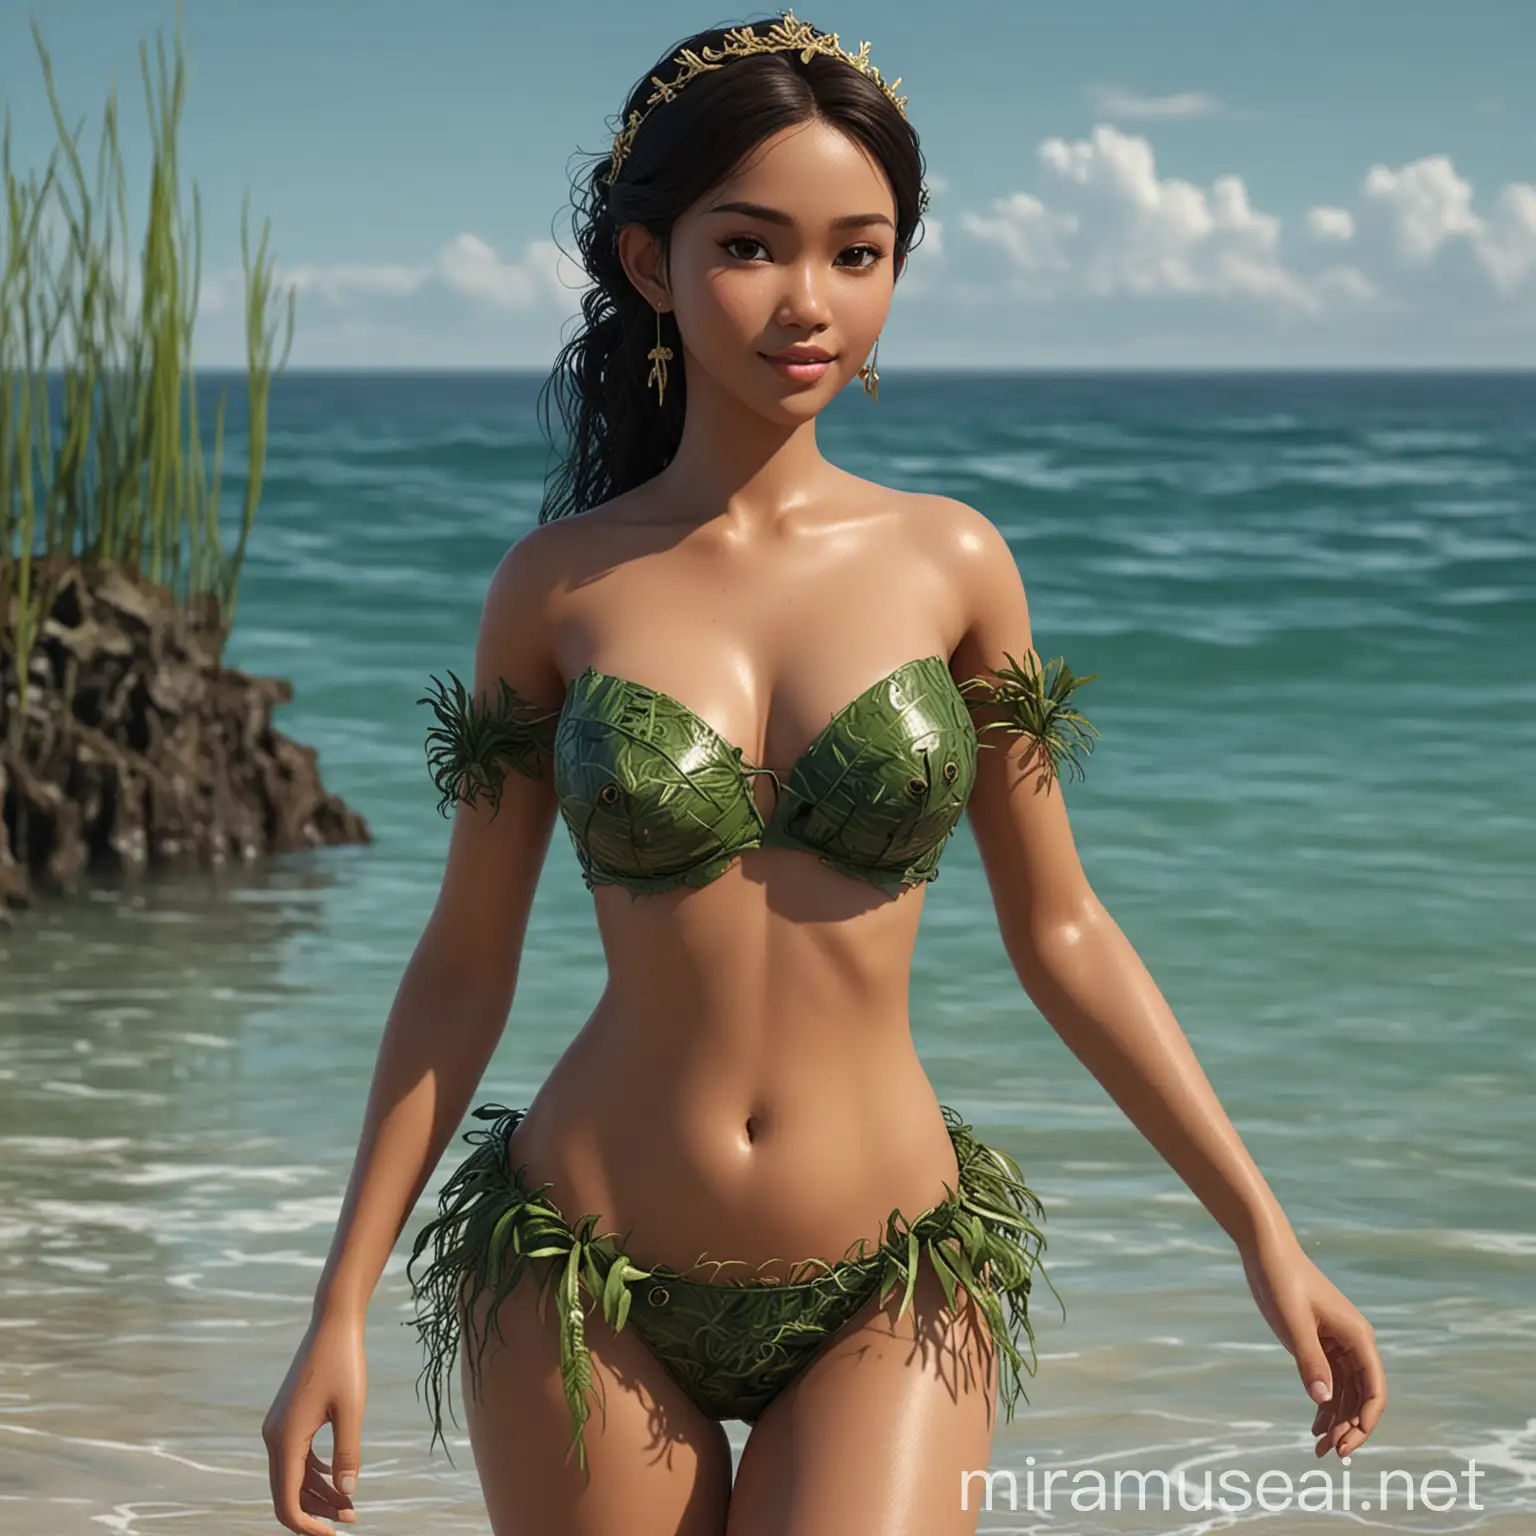 Seductive Indonesian Sea Princess in Vibrant Seaweed Bikini